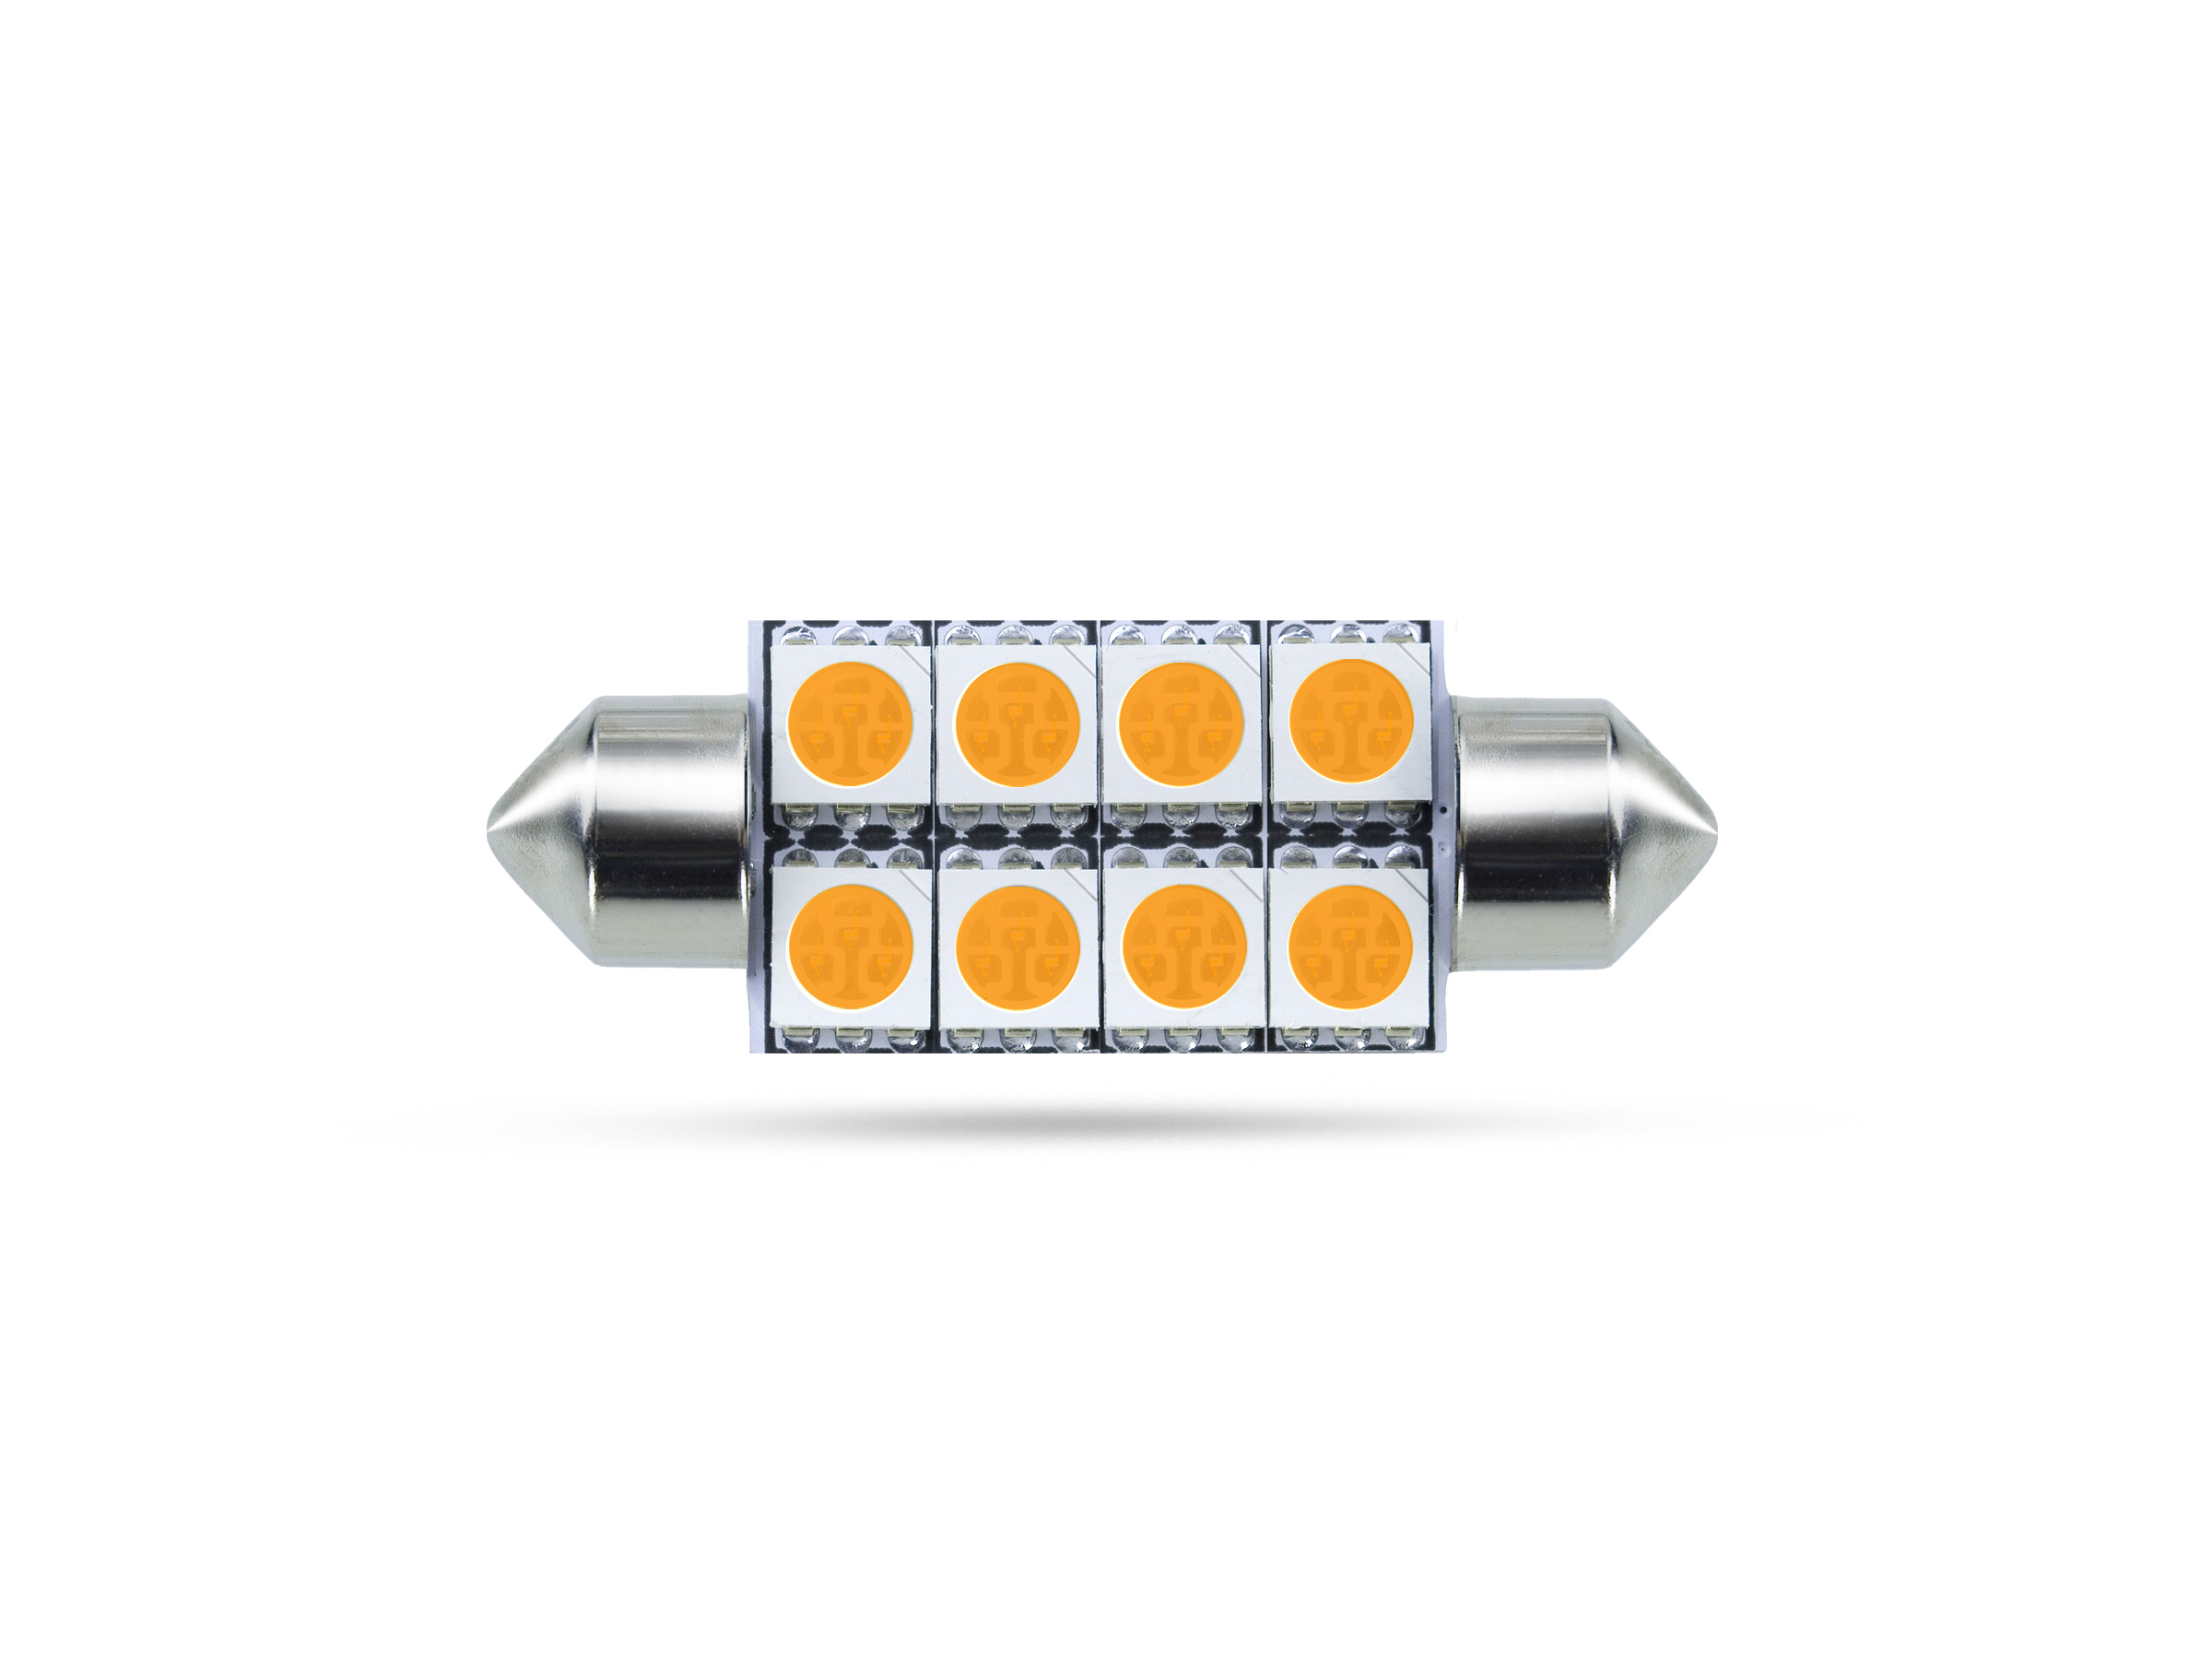 39mm 8x3-Chip SMD LED Soffitte Innenraumlicht, warmweiss, SMD LED Soffitten,  warmweiss, LED Soffitten, Auto Innenraumlicht, LED Auto  Innenraumbeleuchtung